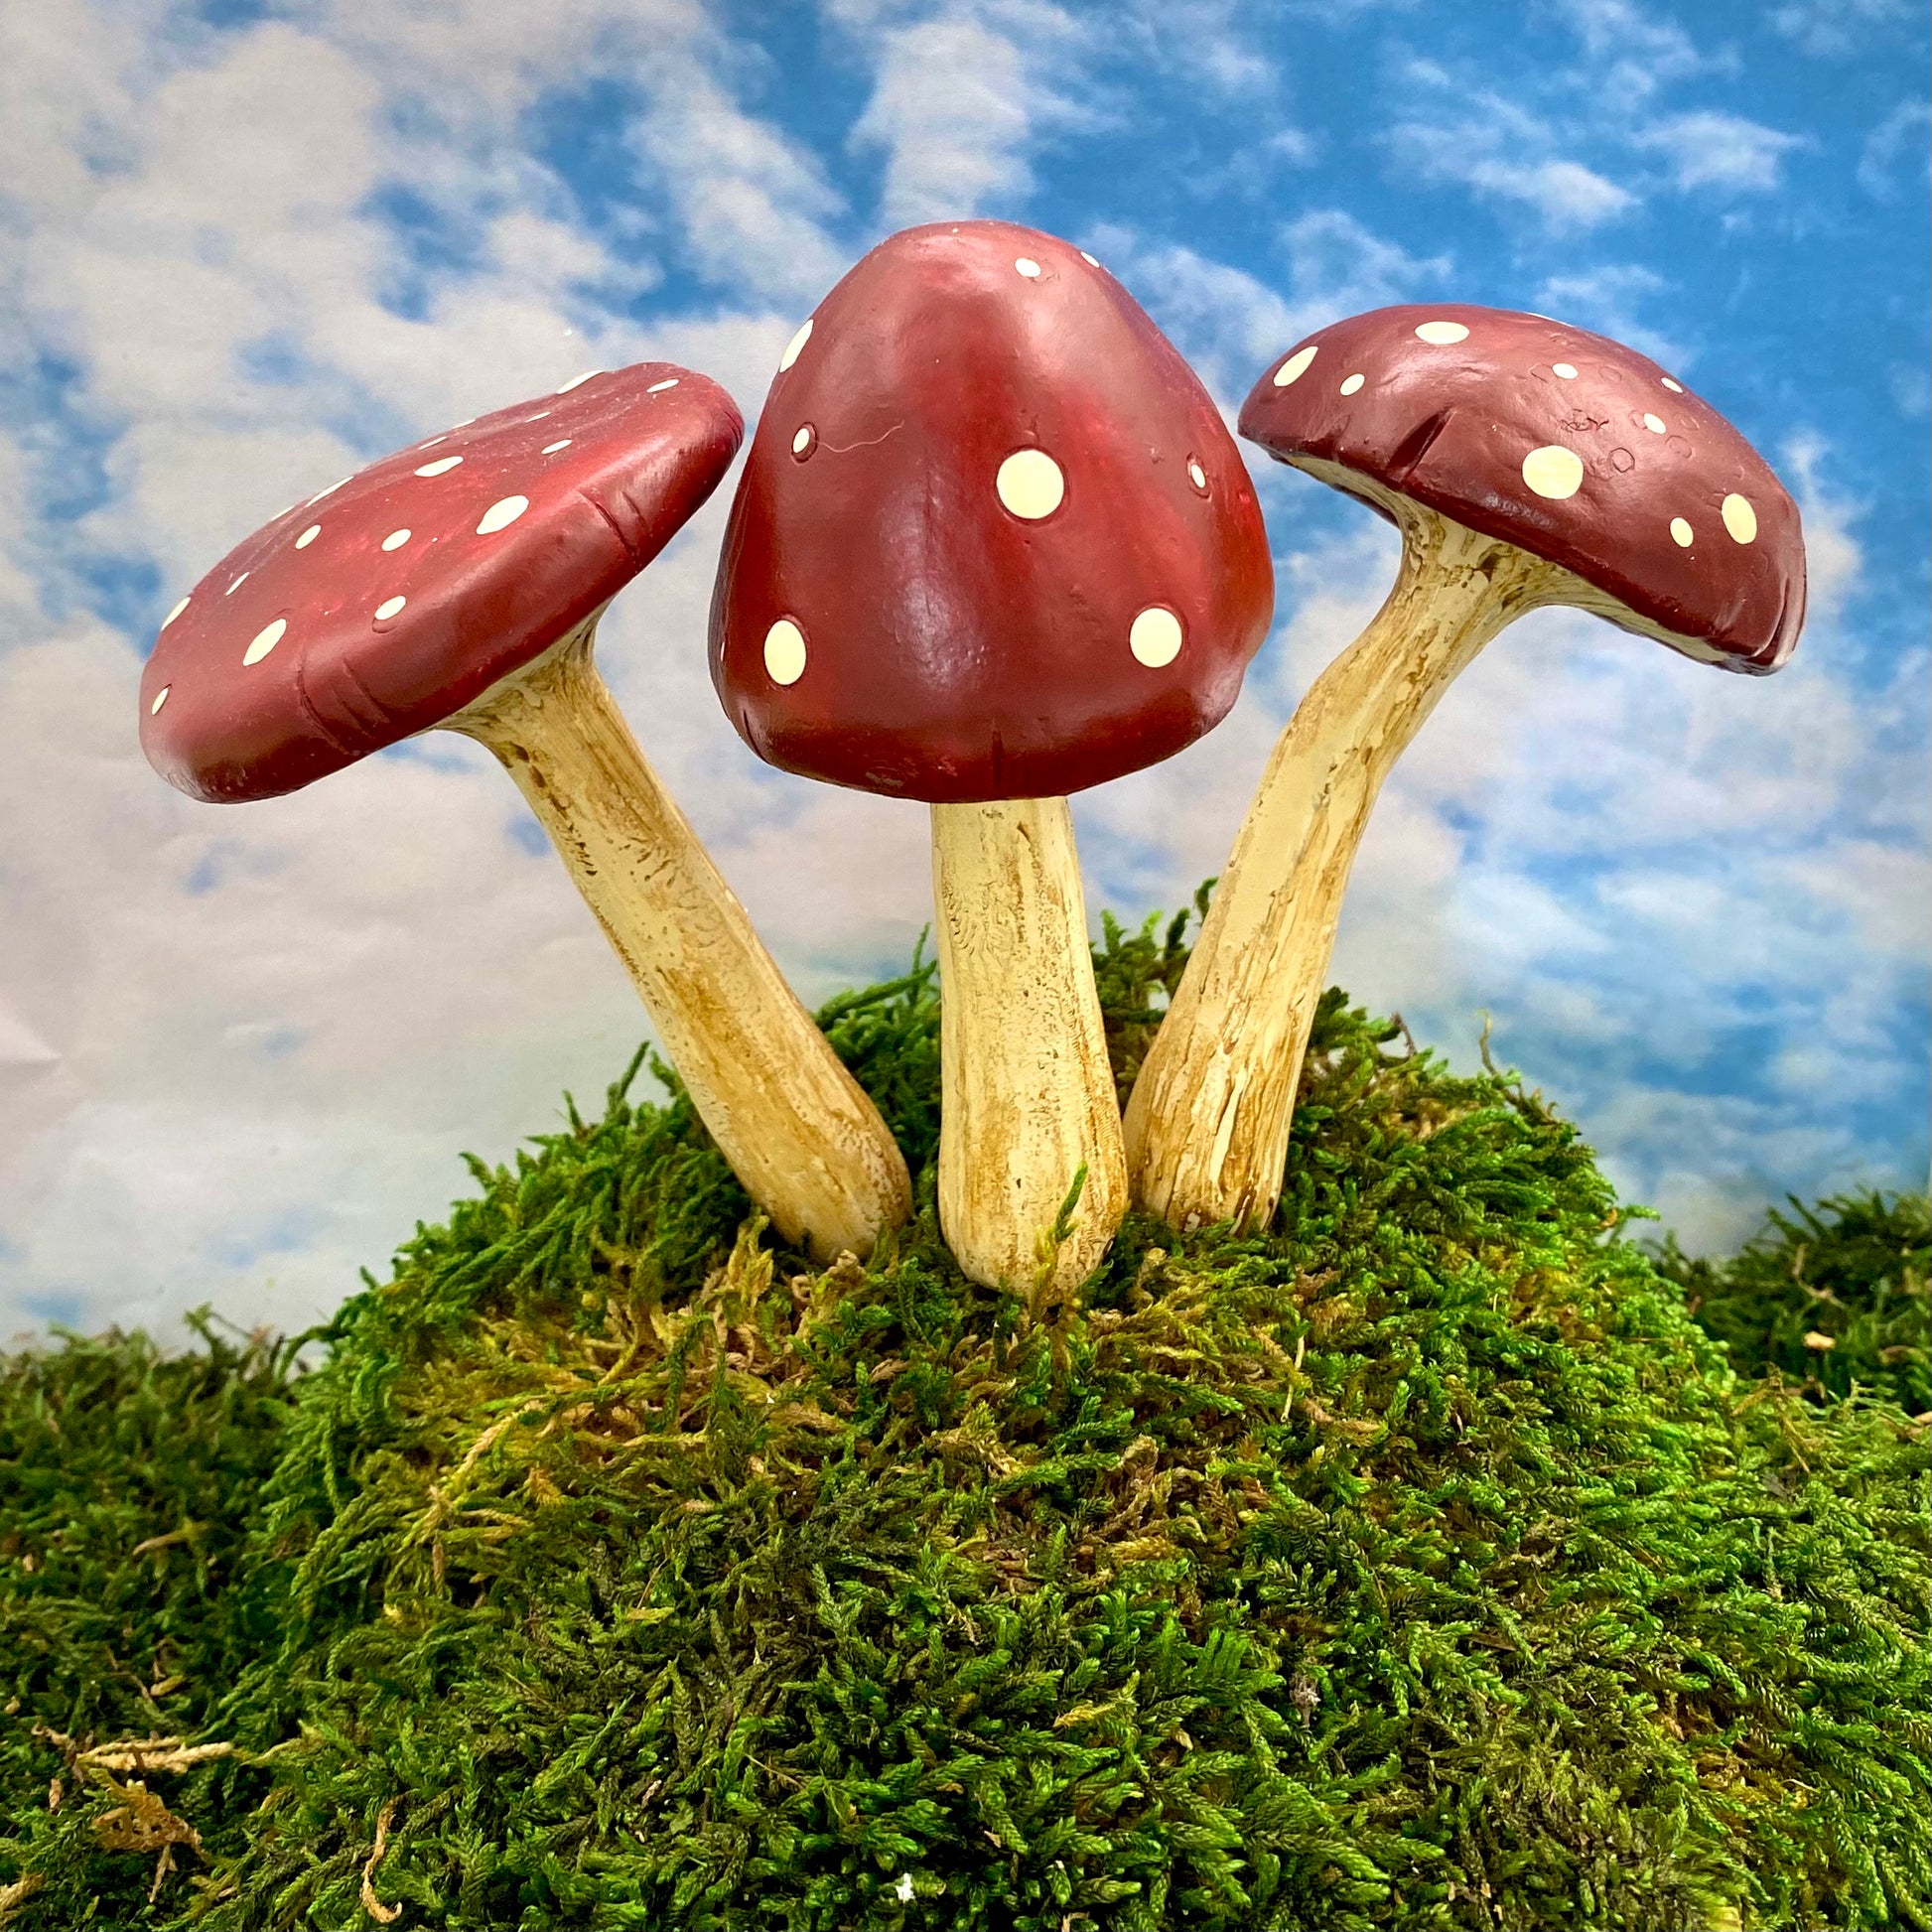 Large Red And Brown Mushrooms, Australia Fairy Gardens, Mushrooms